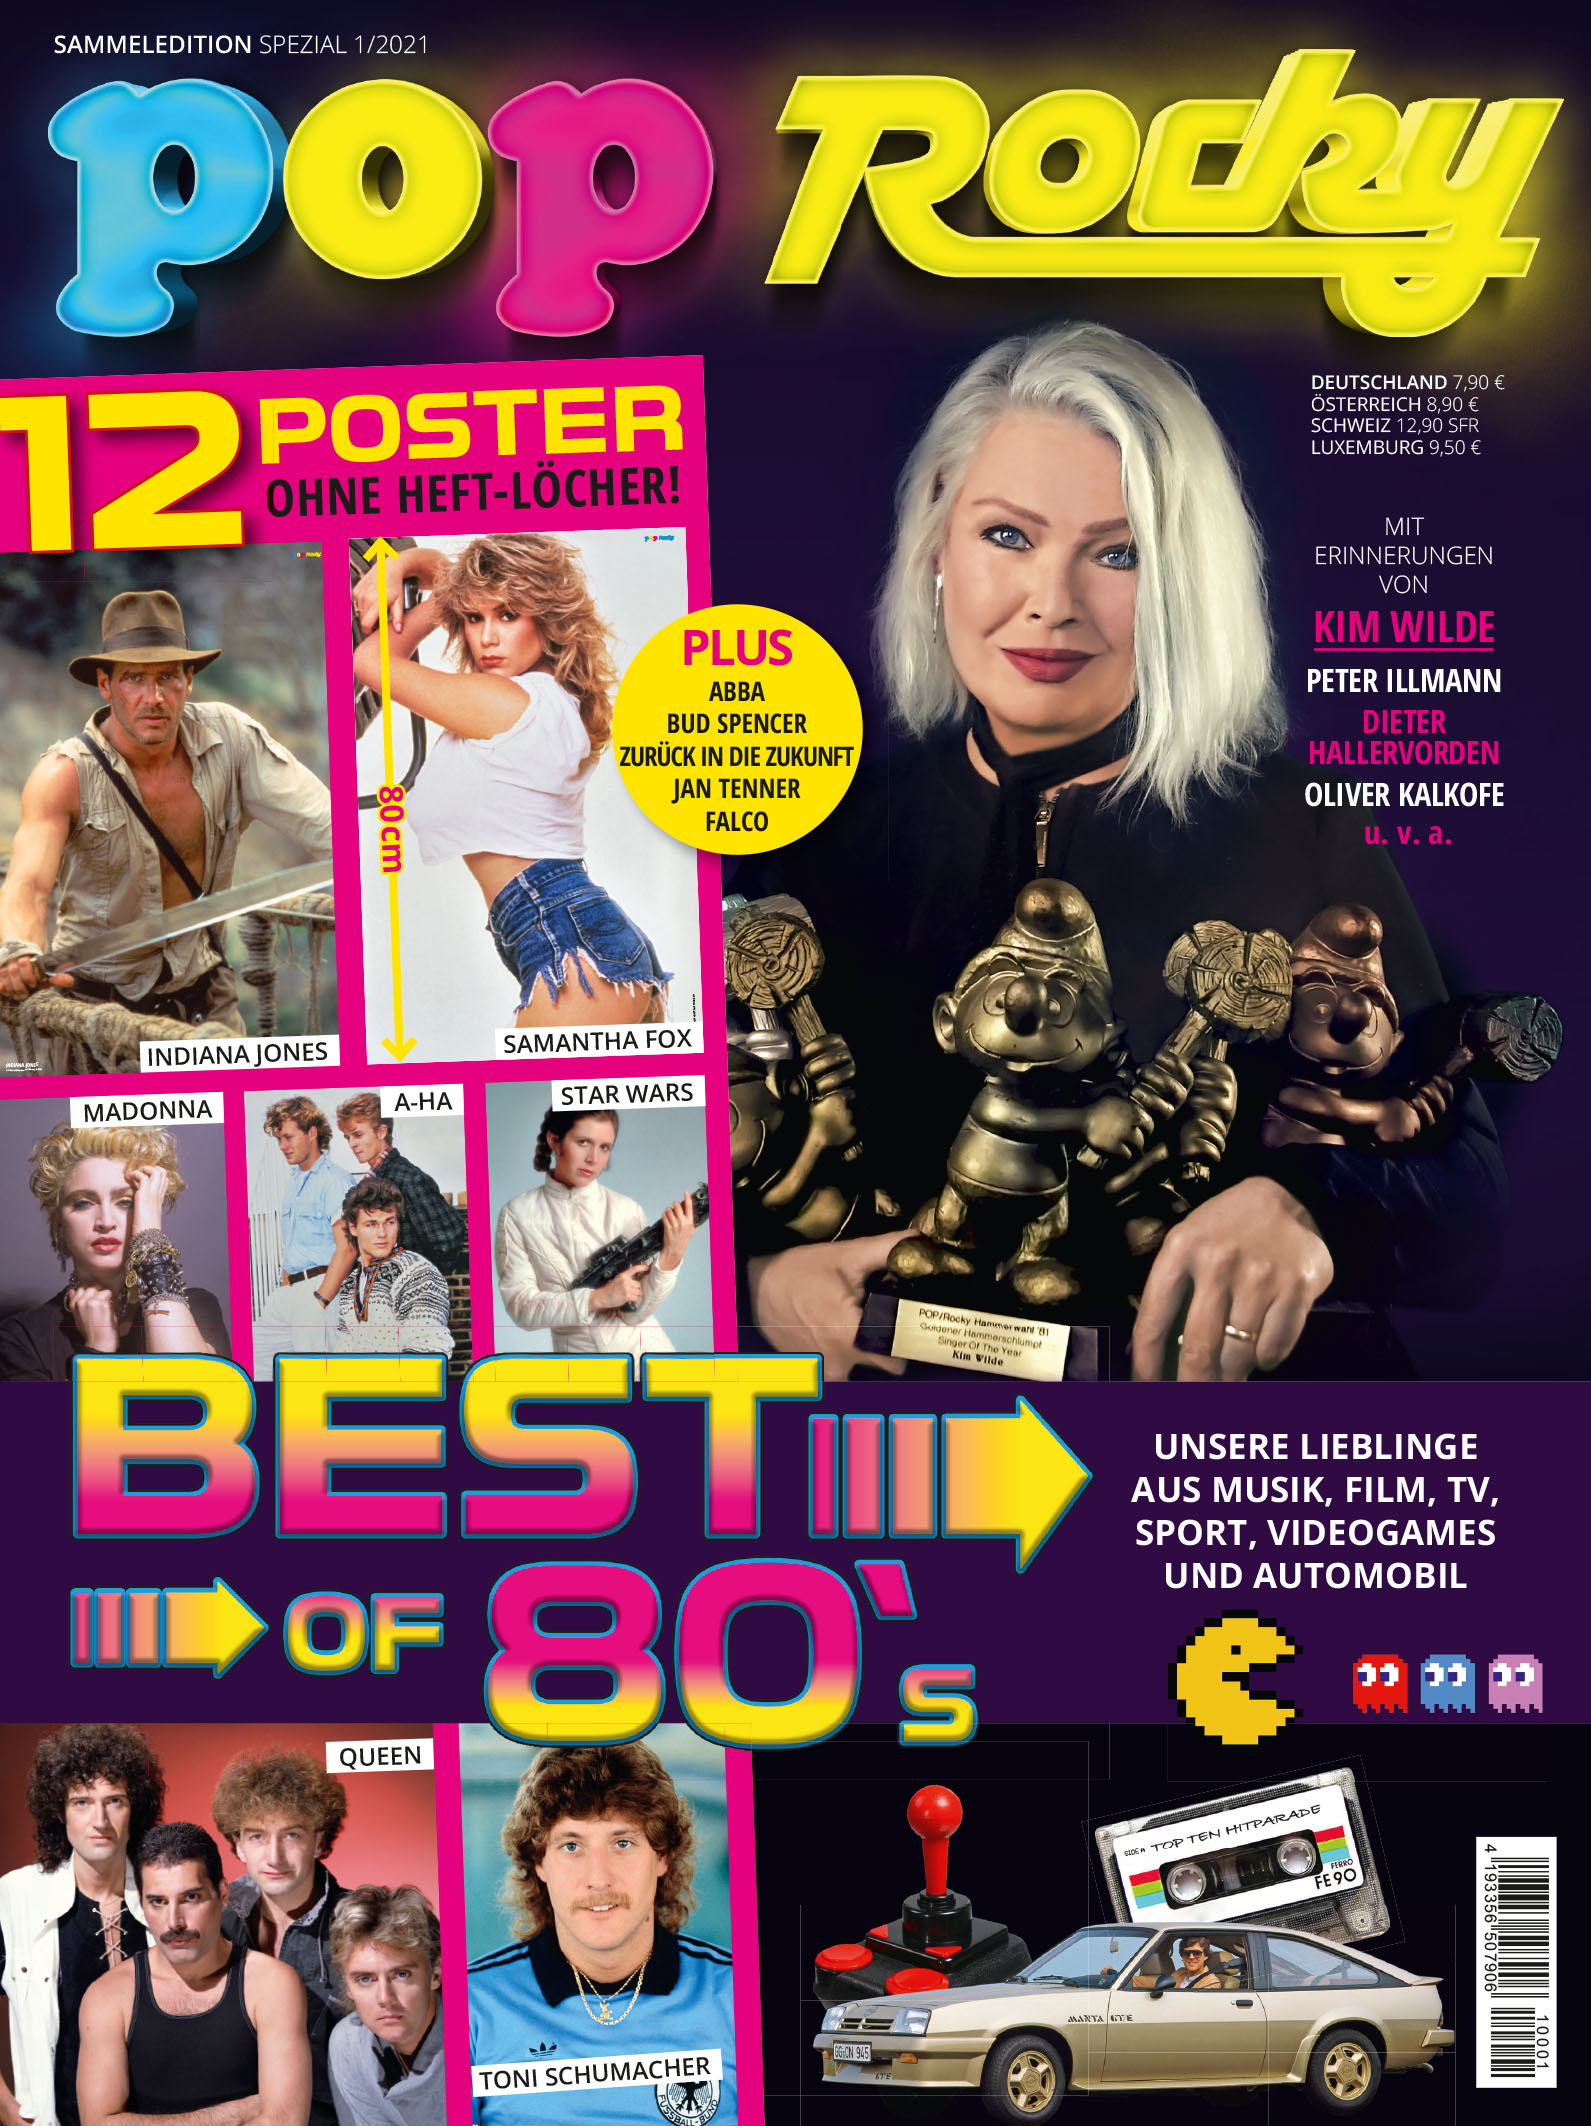 Pop Rocky 2021 E-Paper mit Madonna, Star Wars, Abba, A-ha